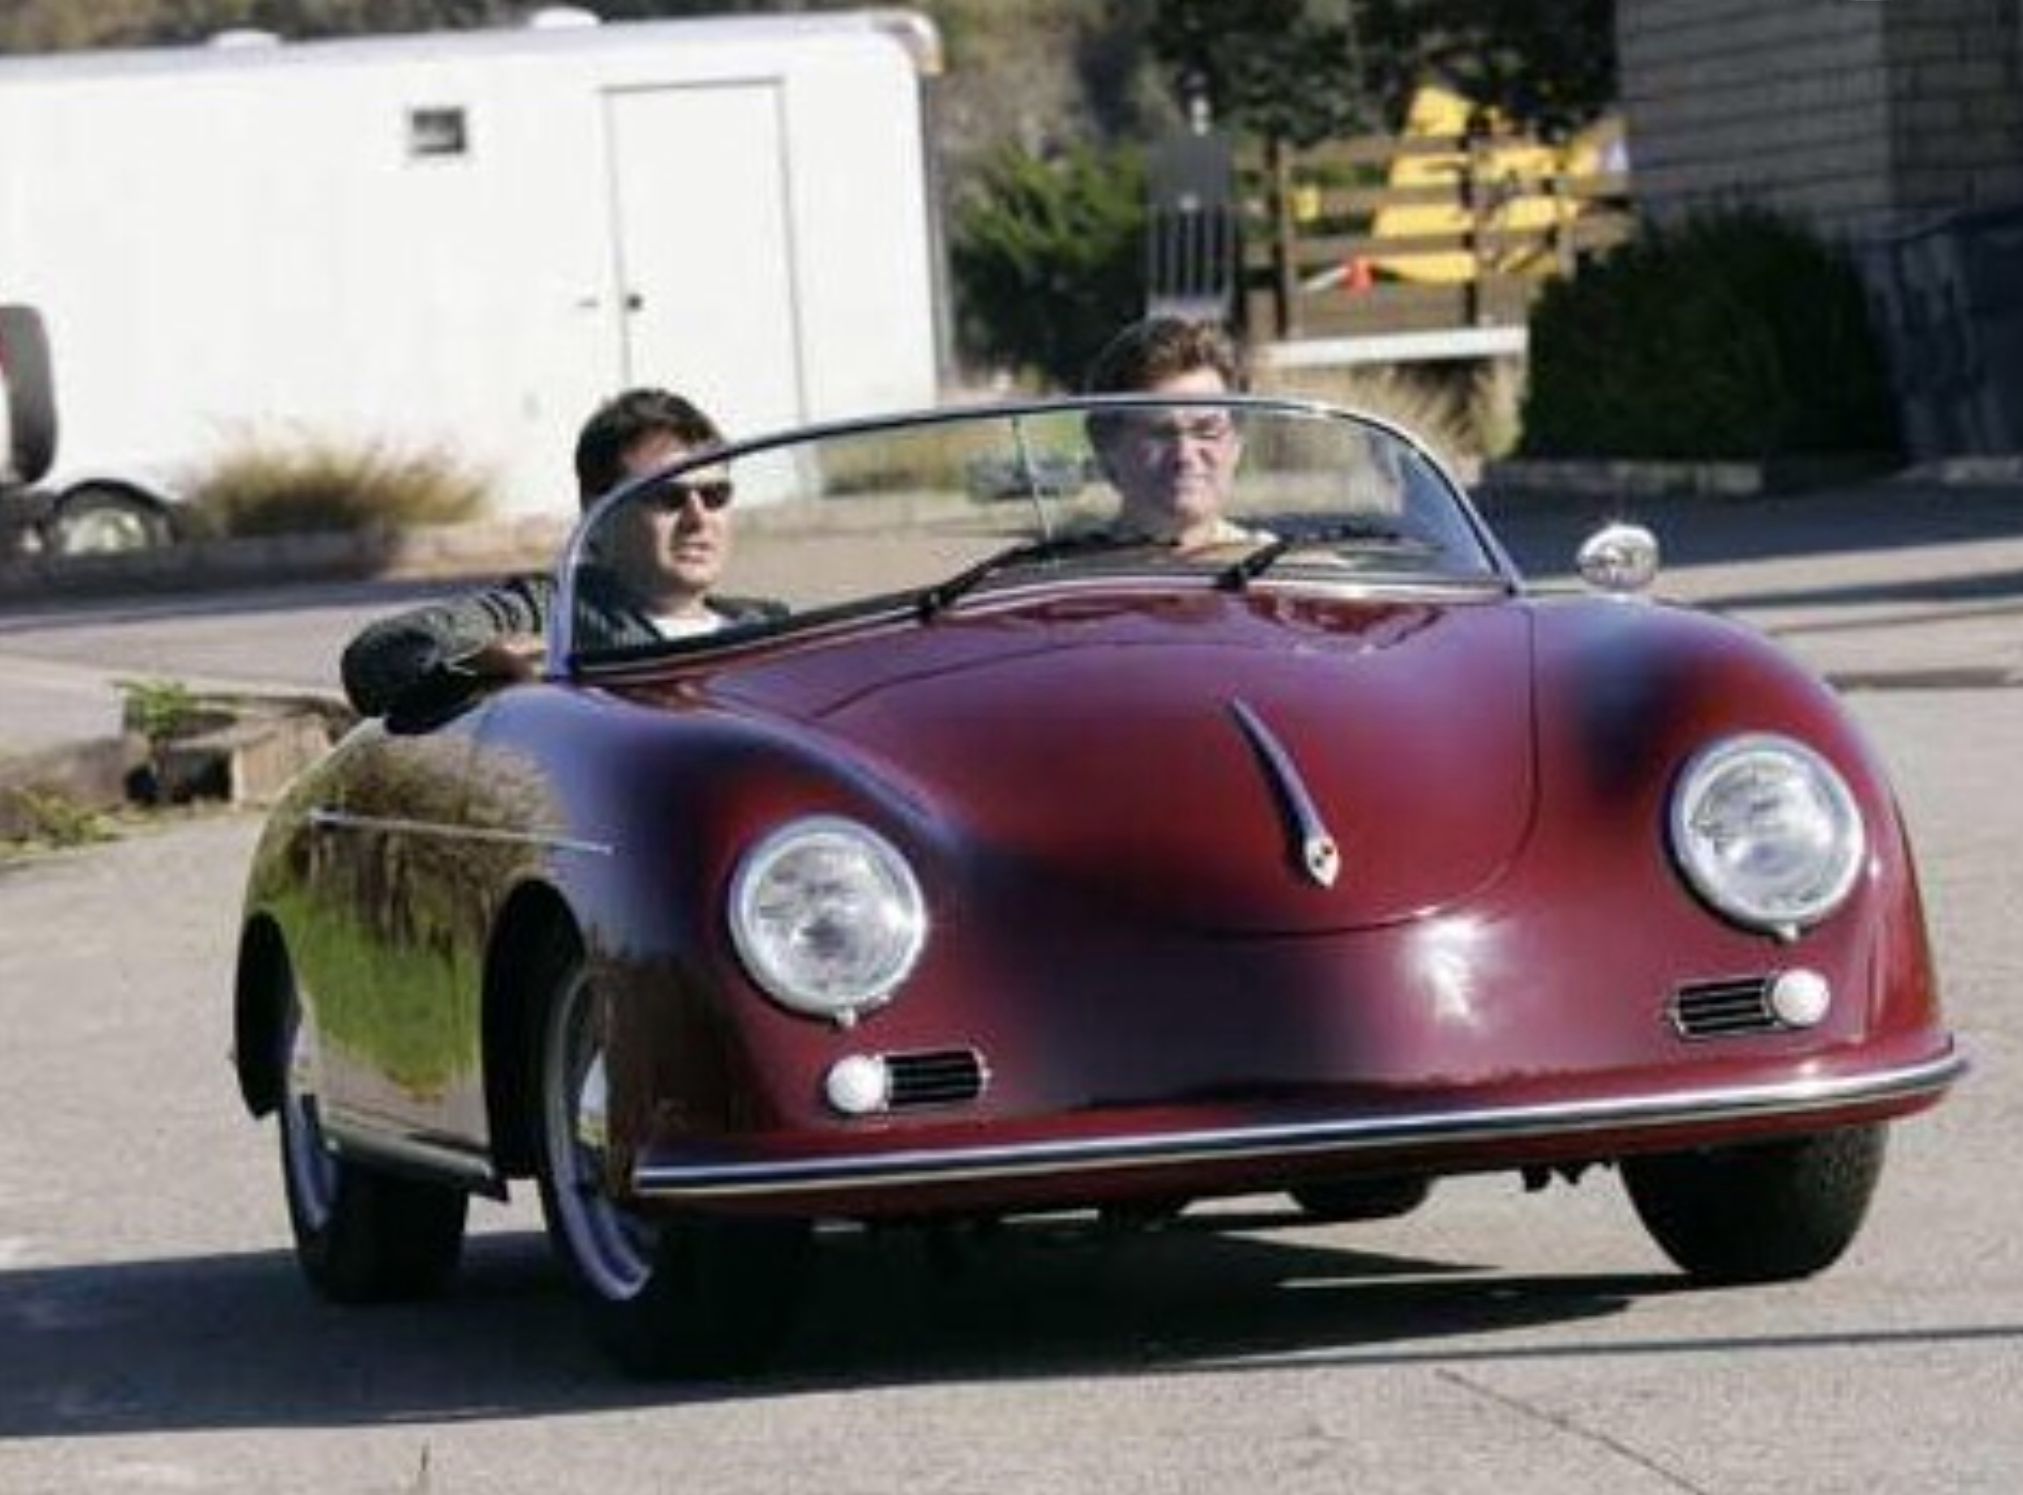 Boston Russell's father Kurt driving classic car